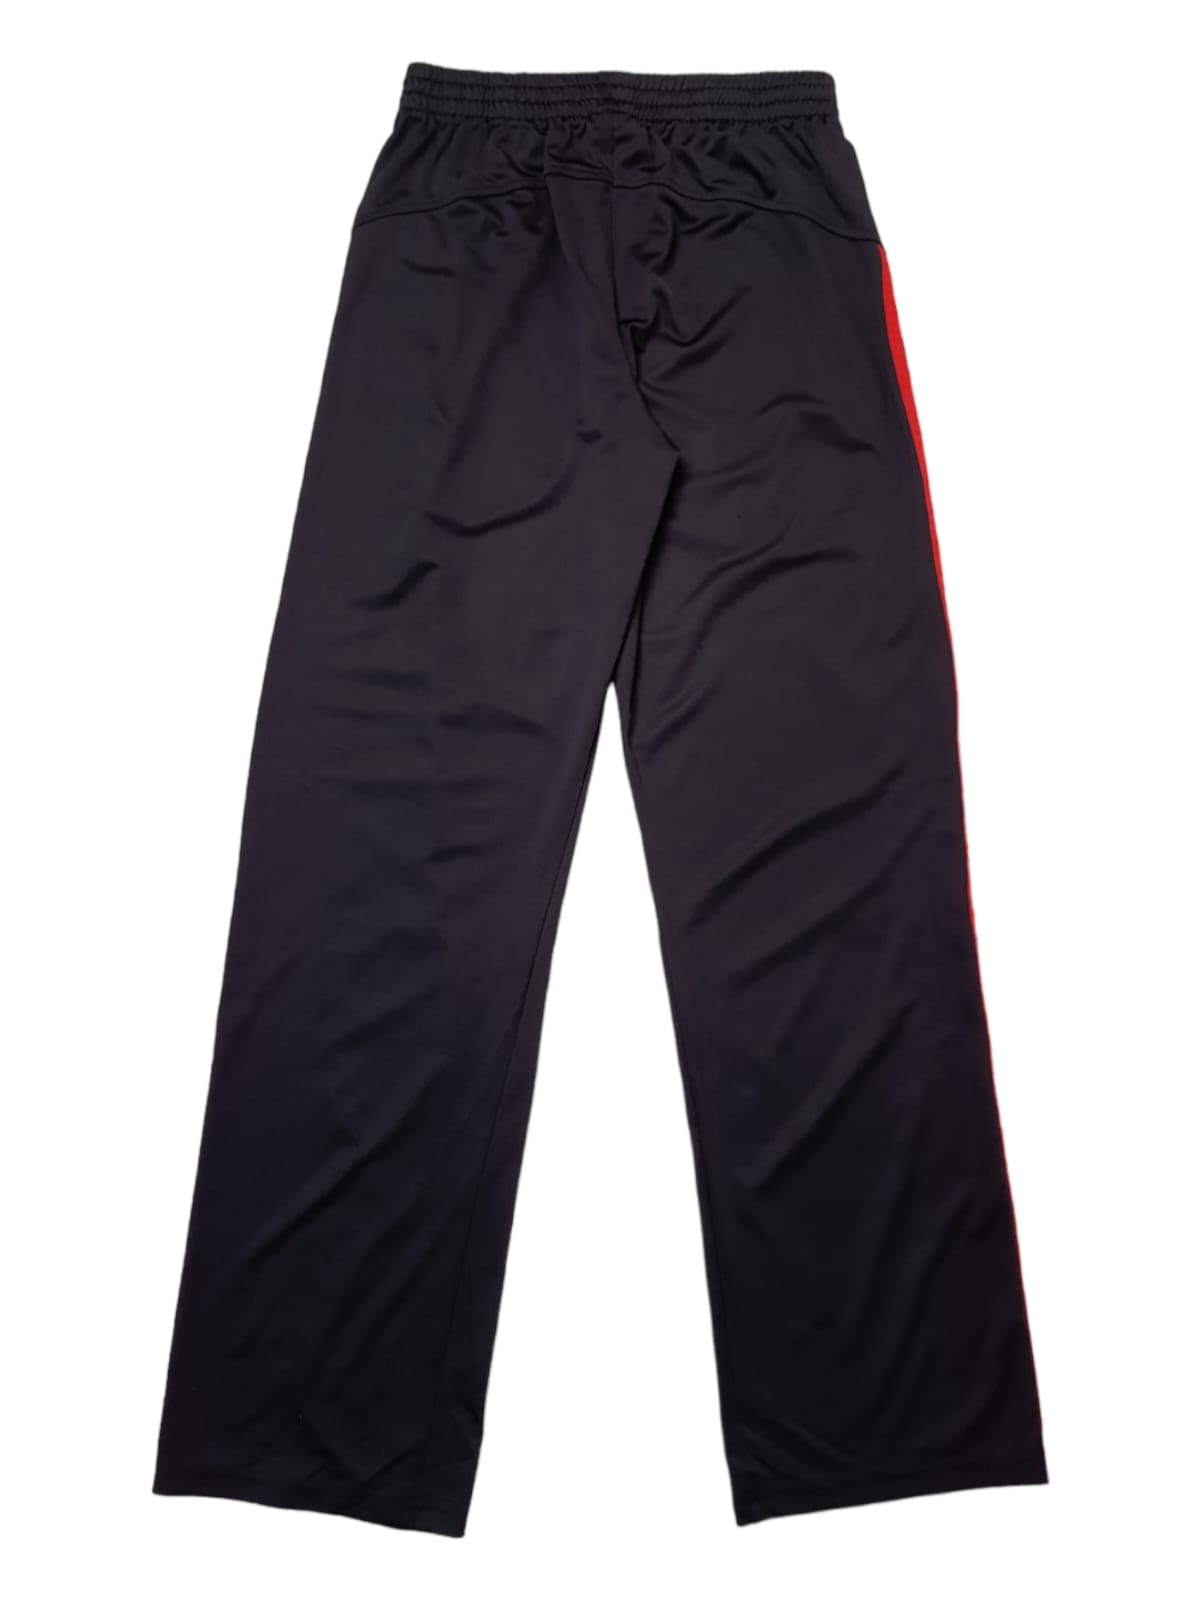 Adidas Red/Black Men's Jogger Pant ( L )